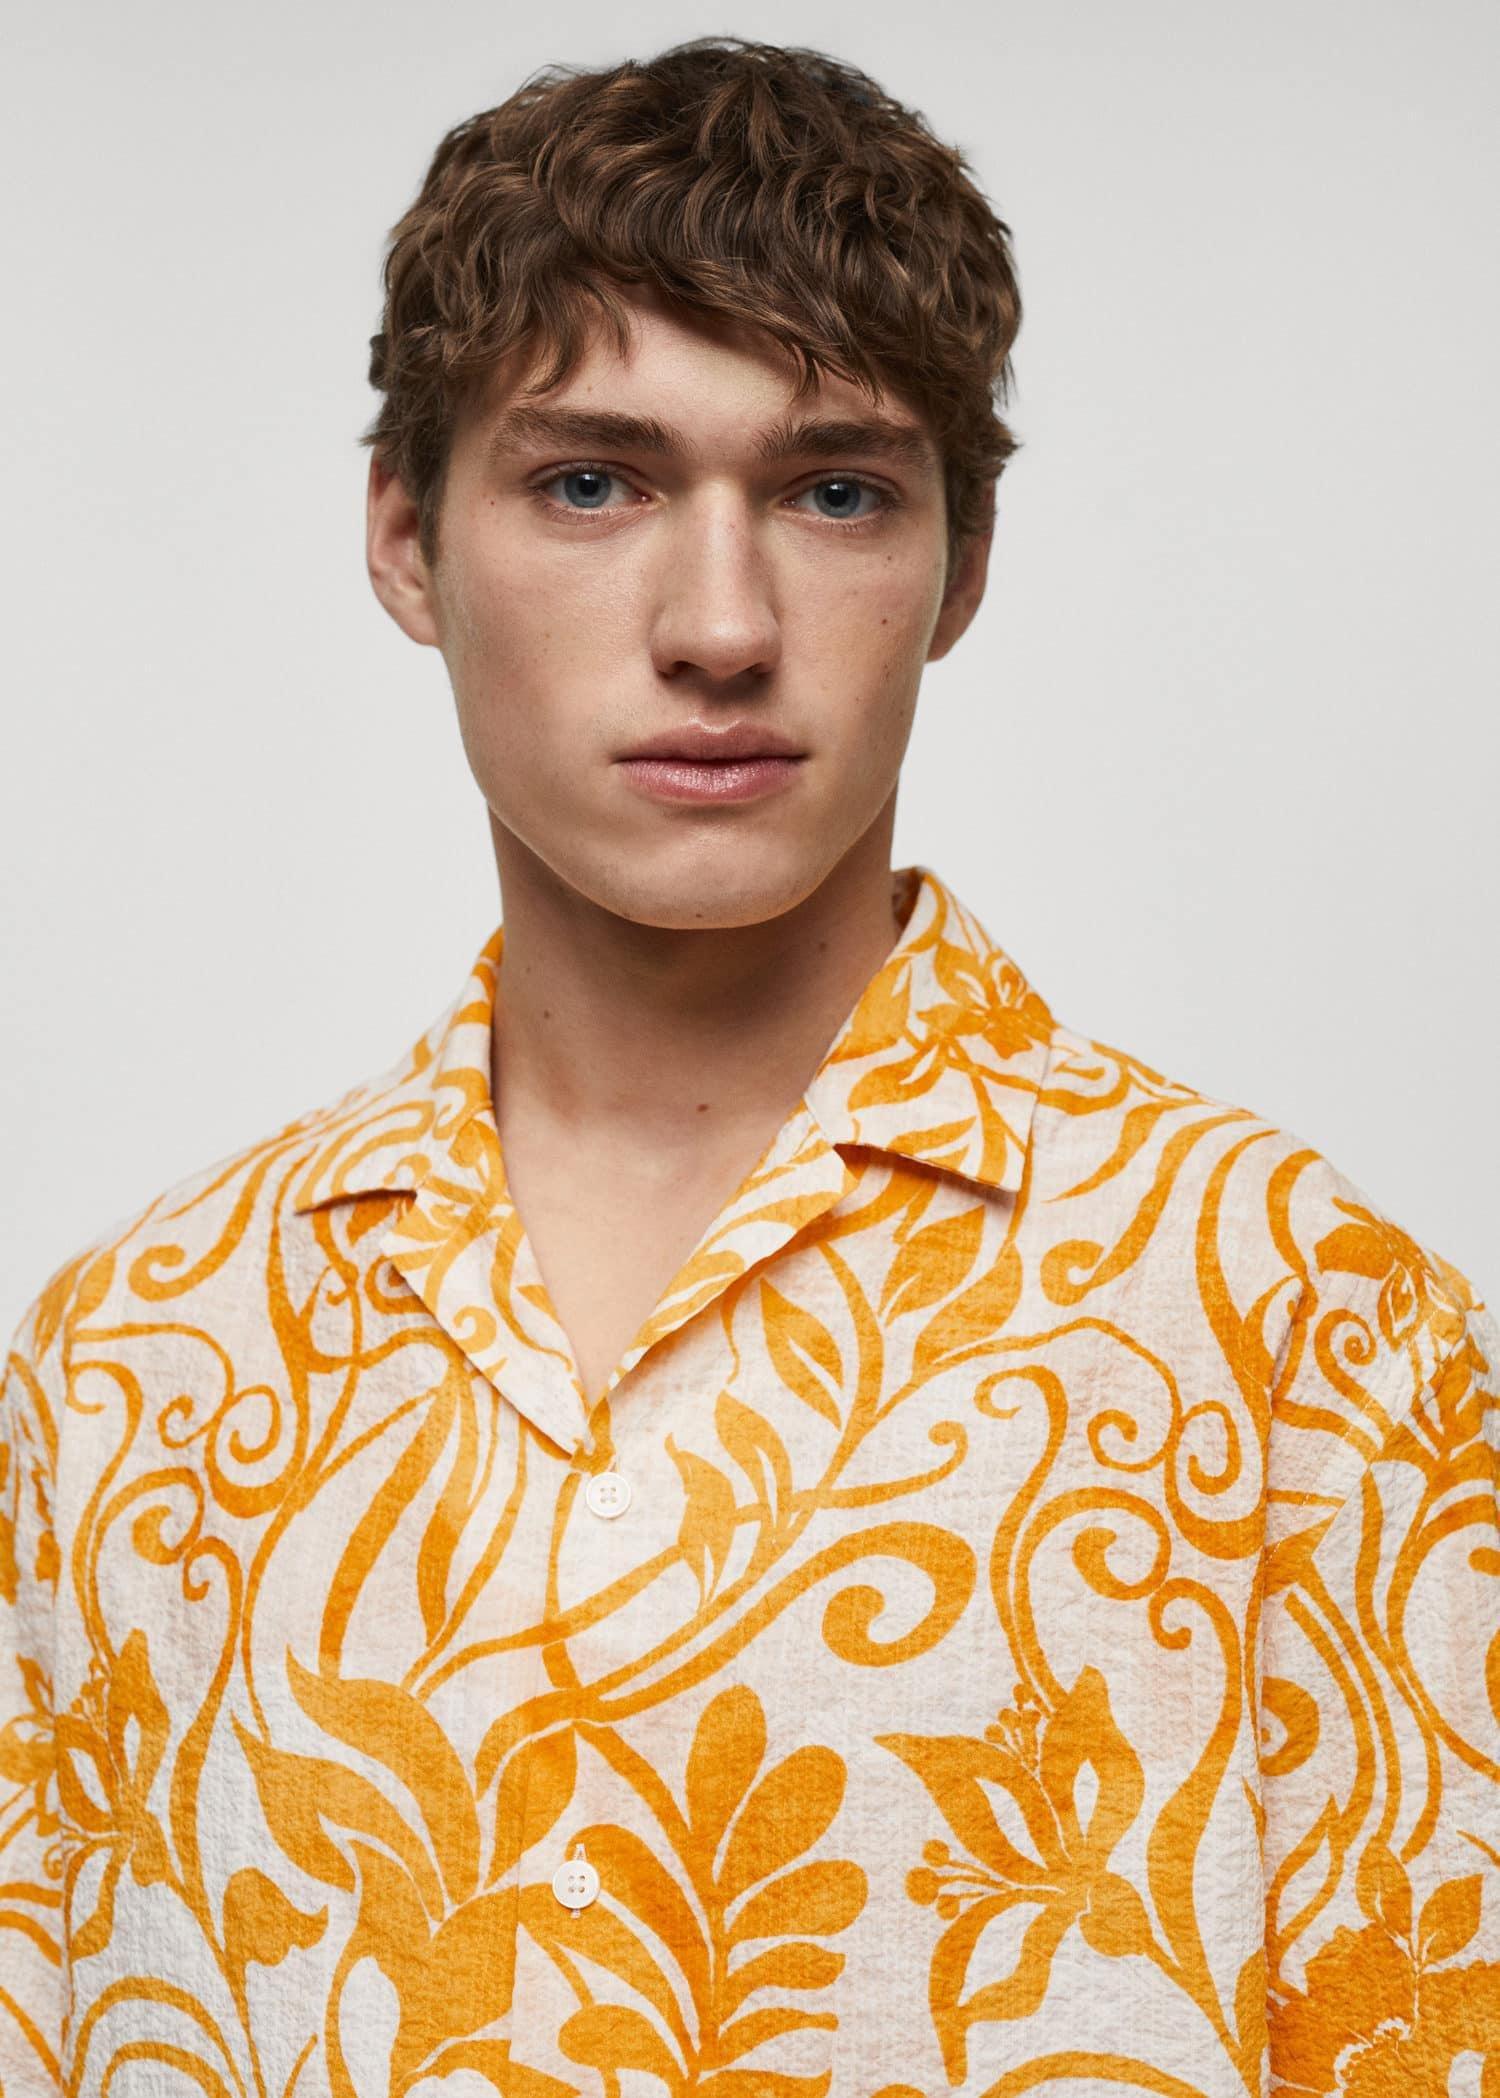 Mango - Yellow Printed Texture Cotton Shirt